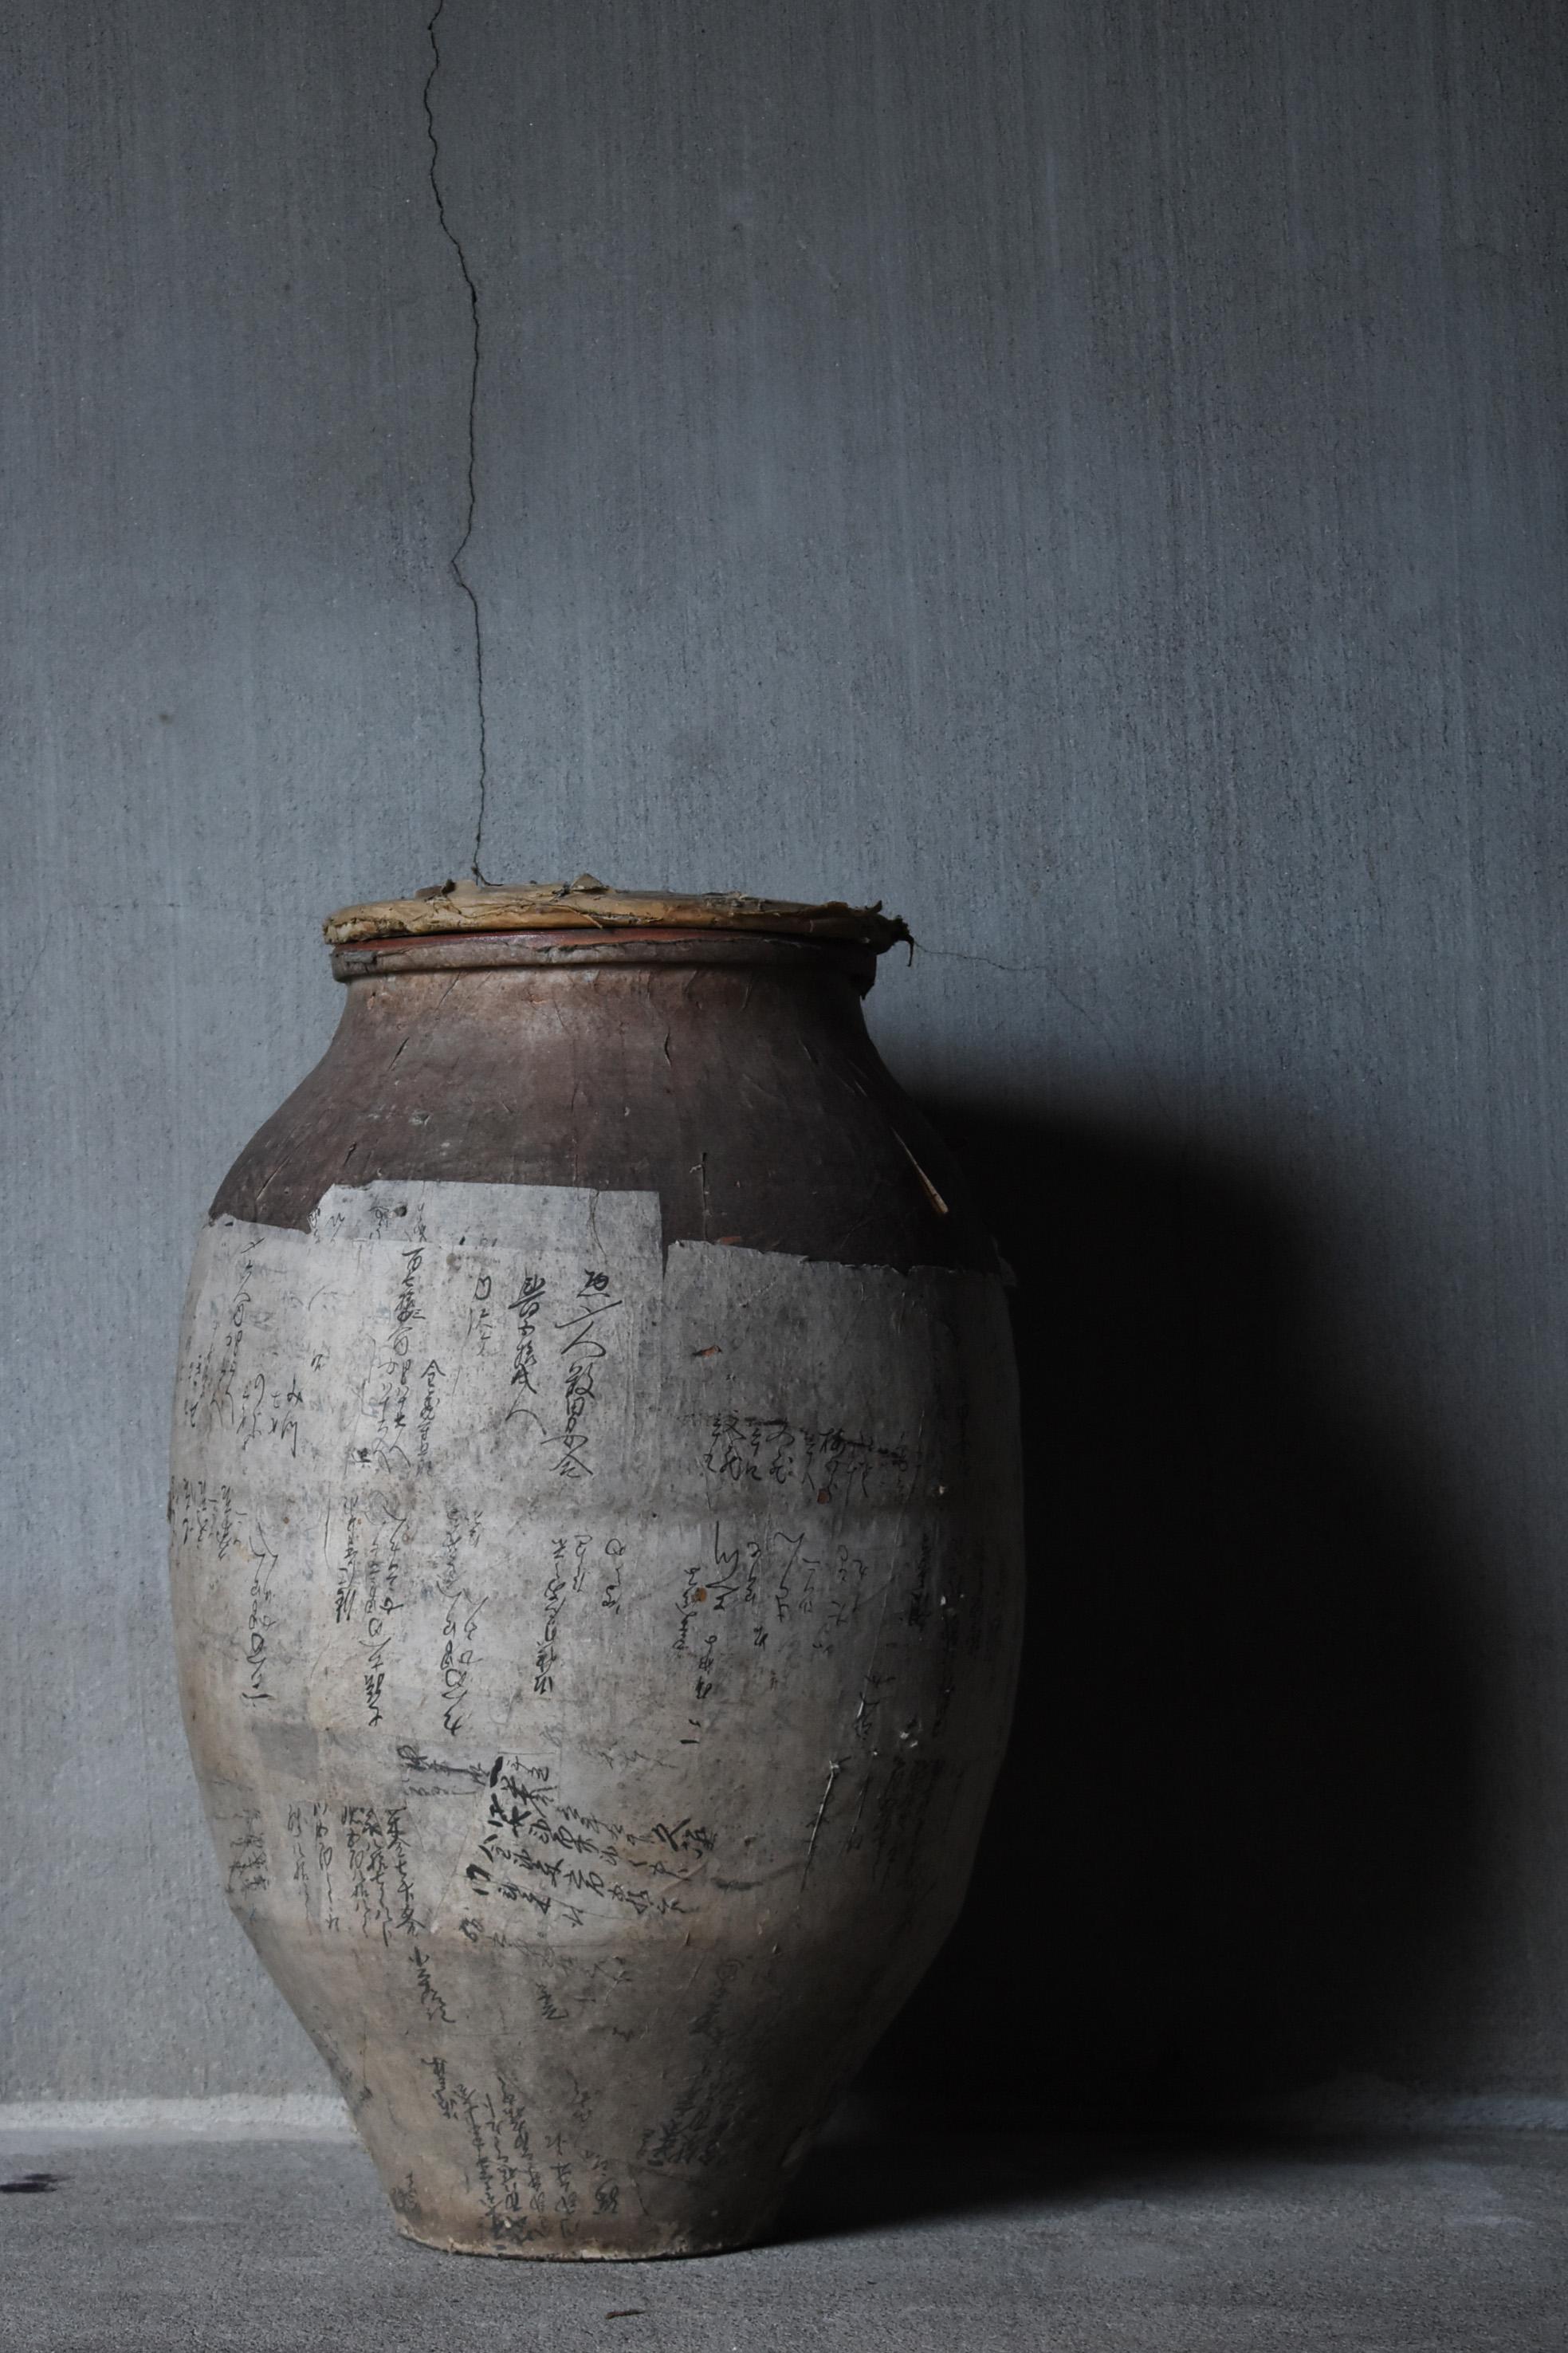 19th Century 1800s-1900s Japanese Pottery Edo Period Tsubo Wabisabi Ceramic Jar Clay